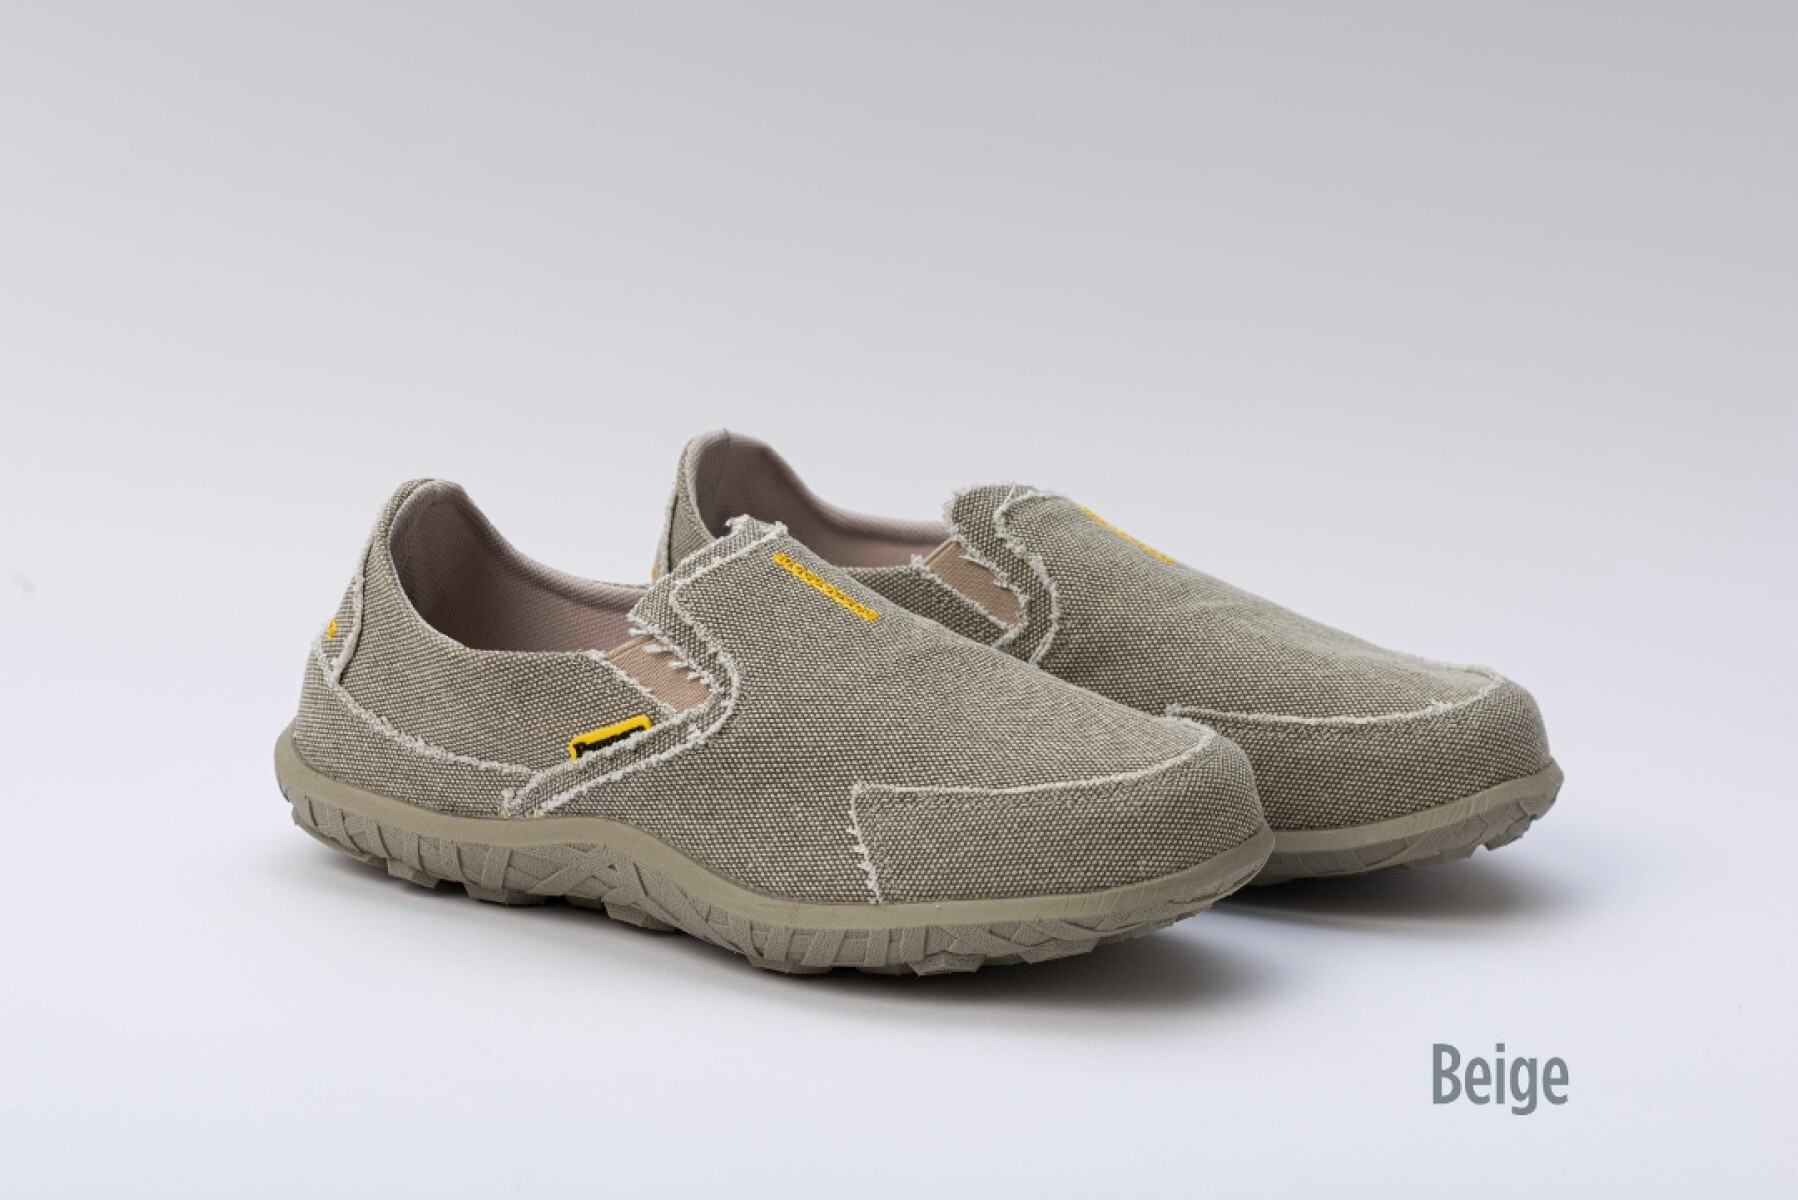 Zapato Pampero Belugo modelo Tooga - Beige 